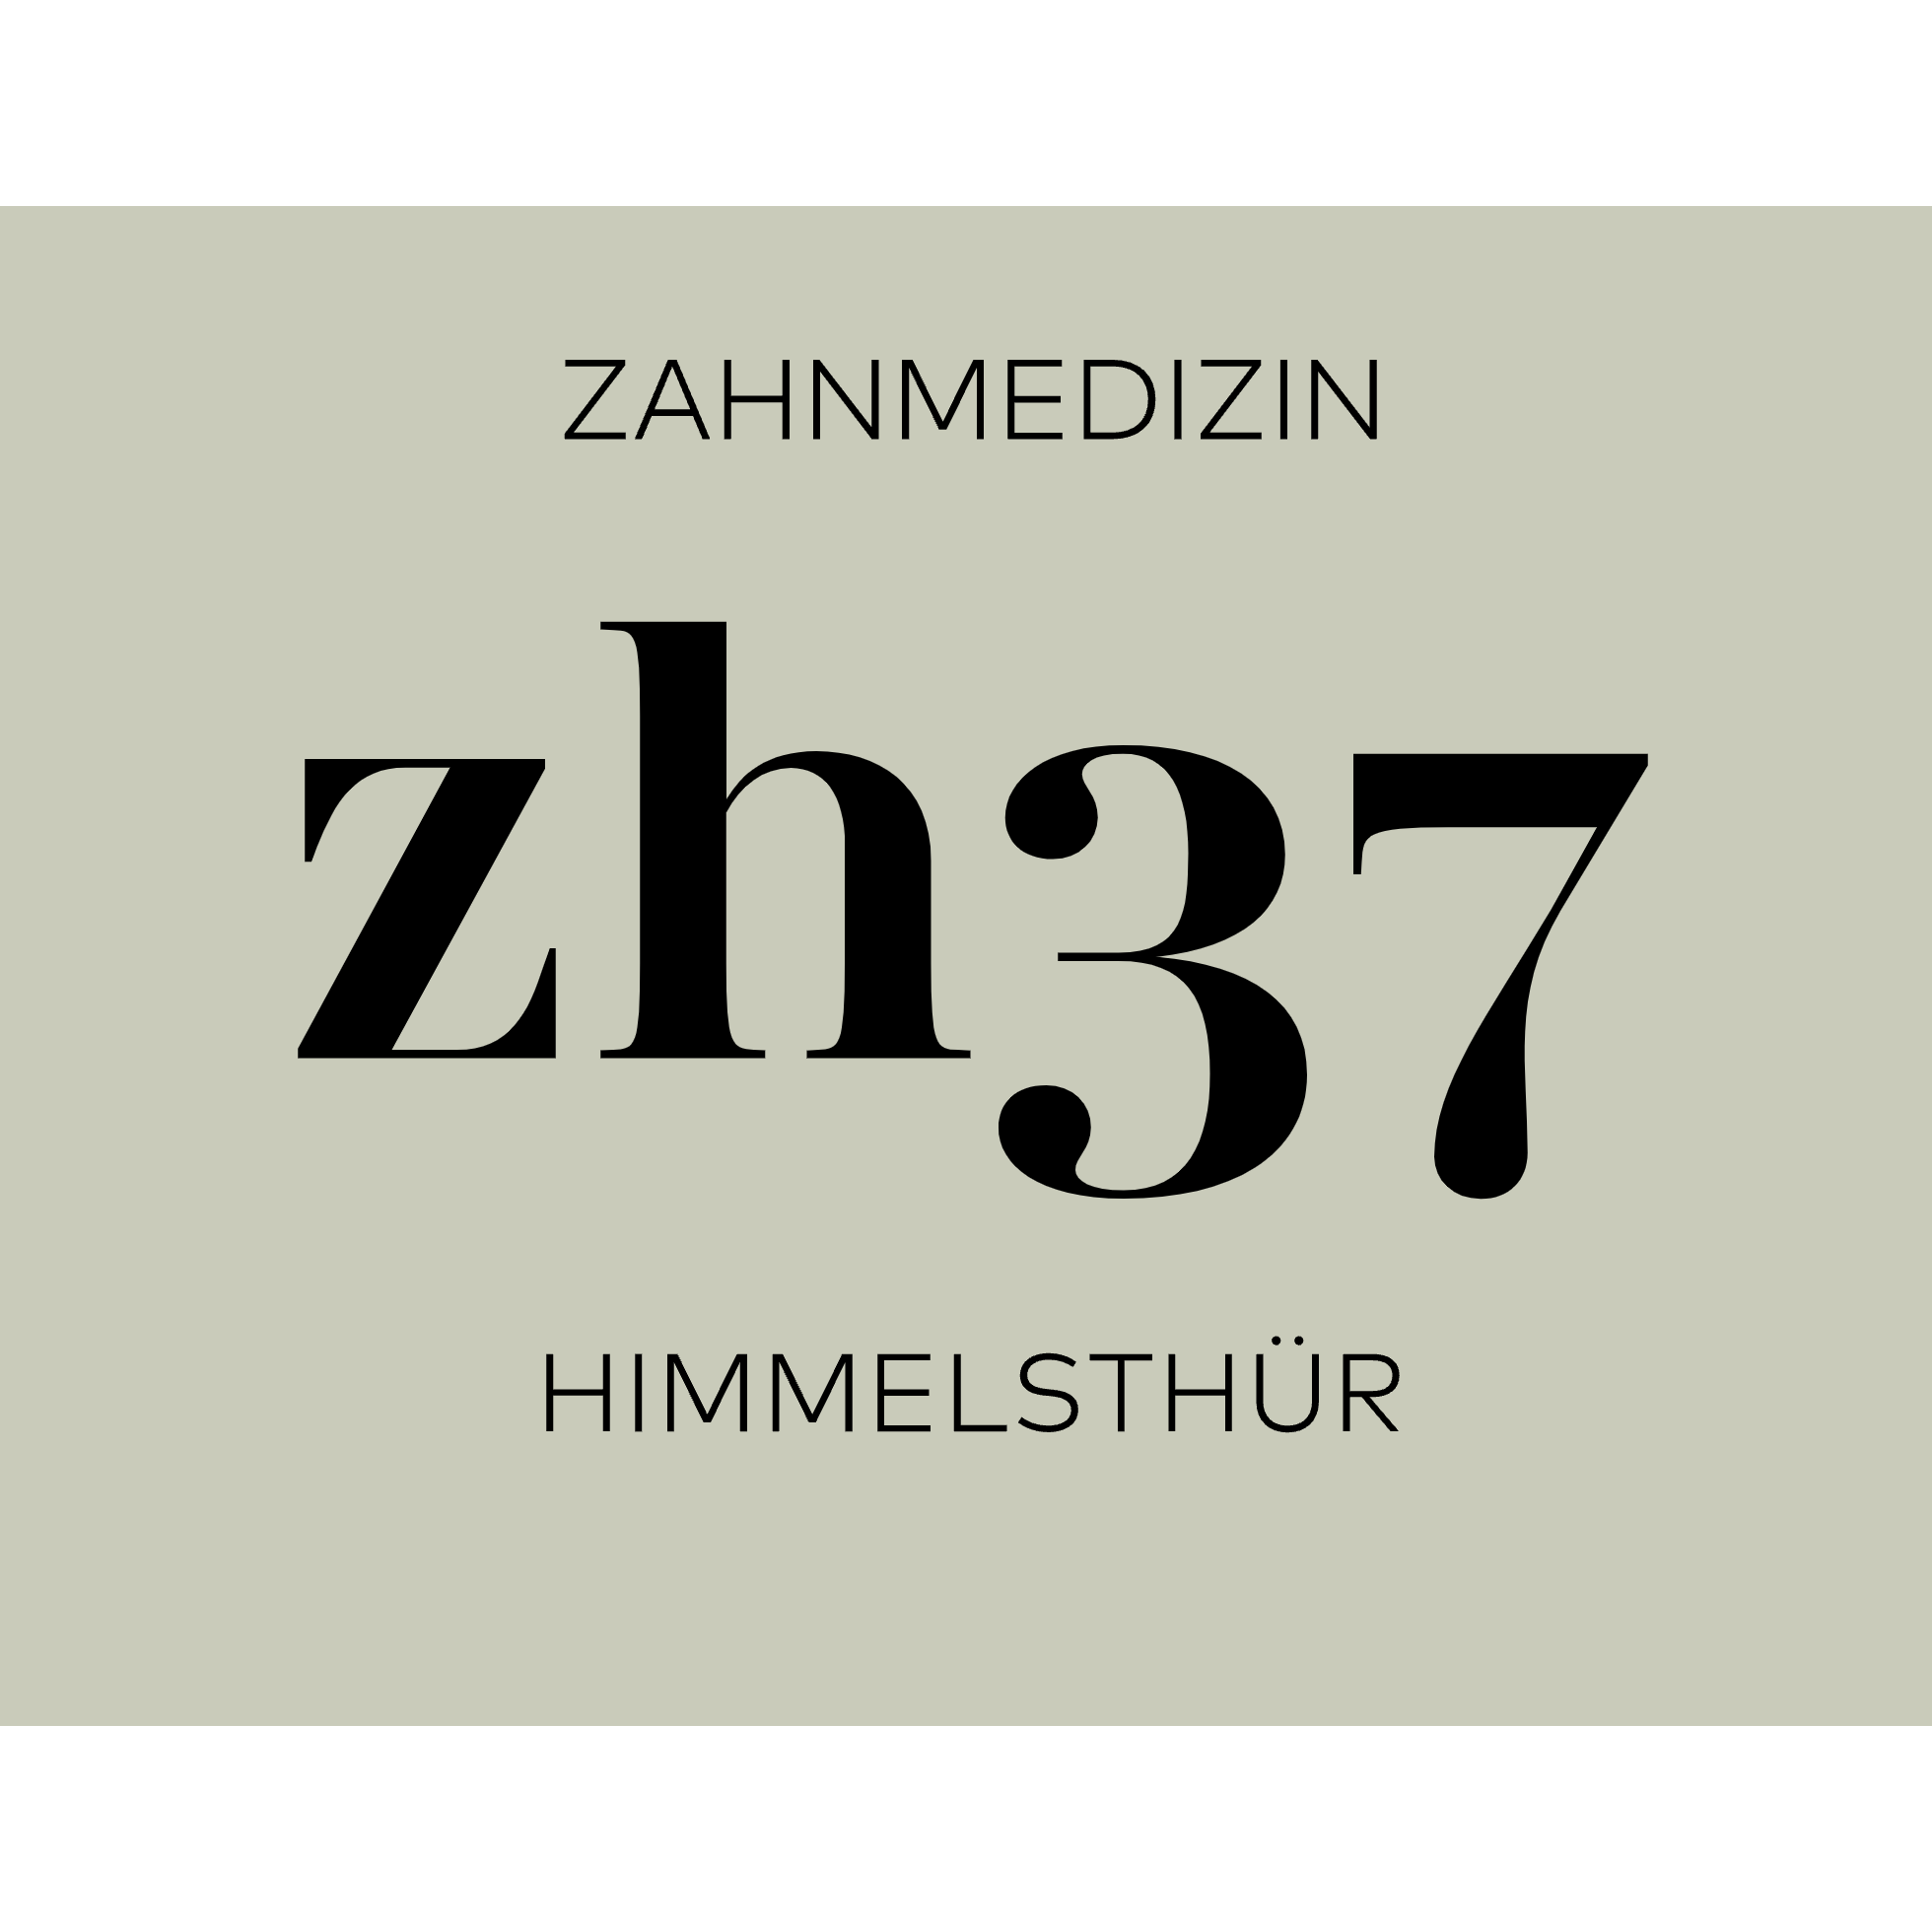 Zahnmedizin Himmelsthür zh37 - Zahnarzt Hildesheim  